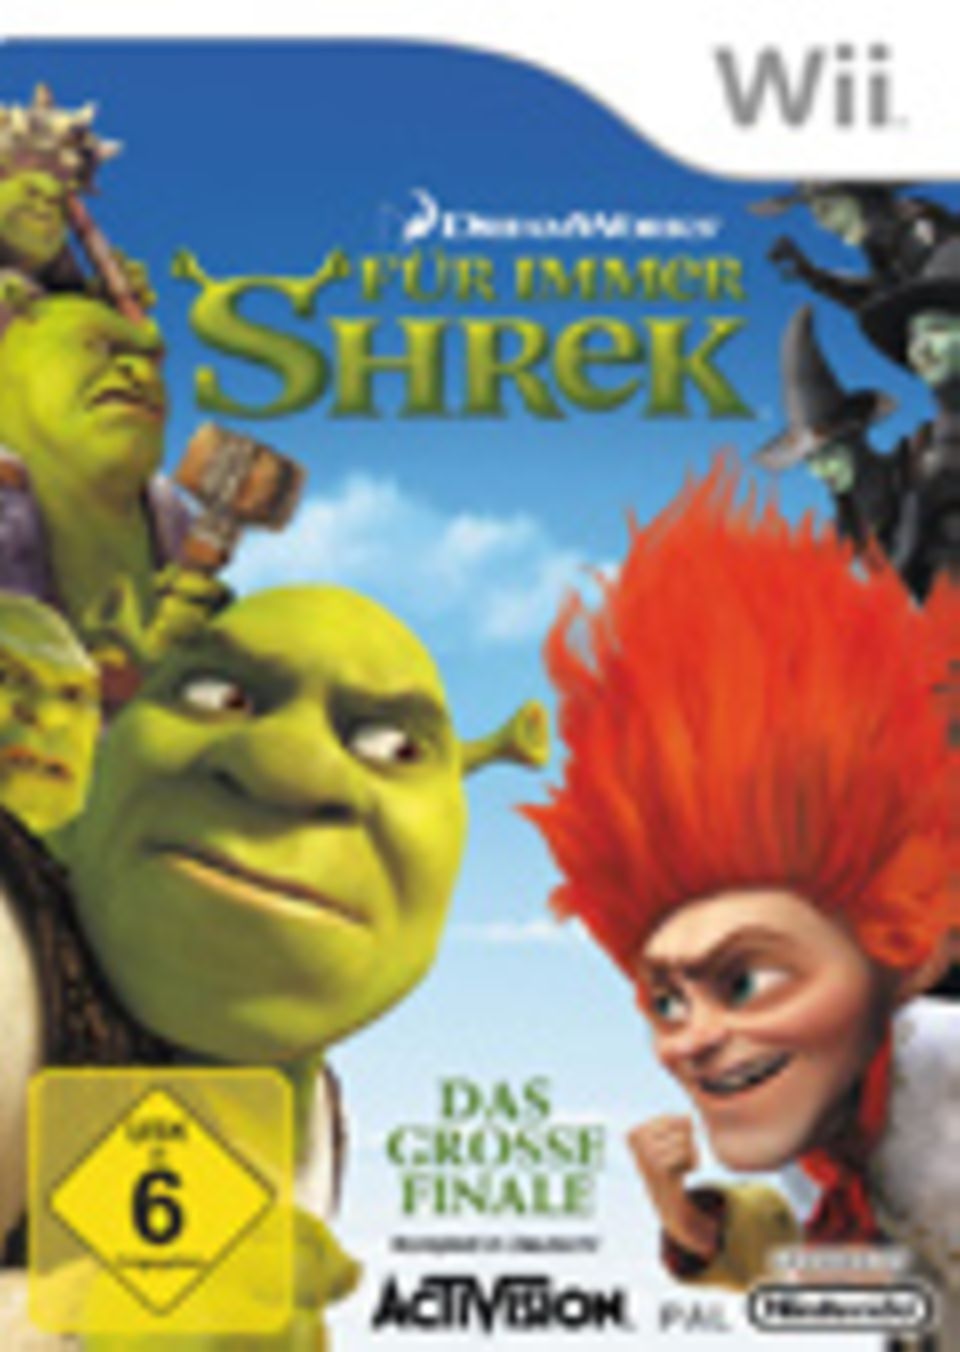 Spieletest: "Shrek is back!"